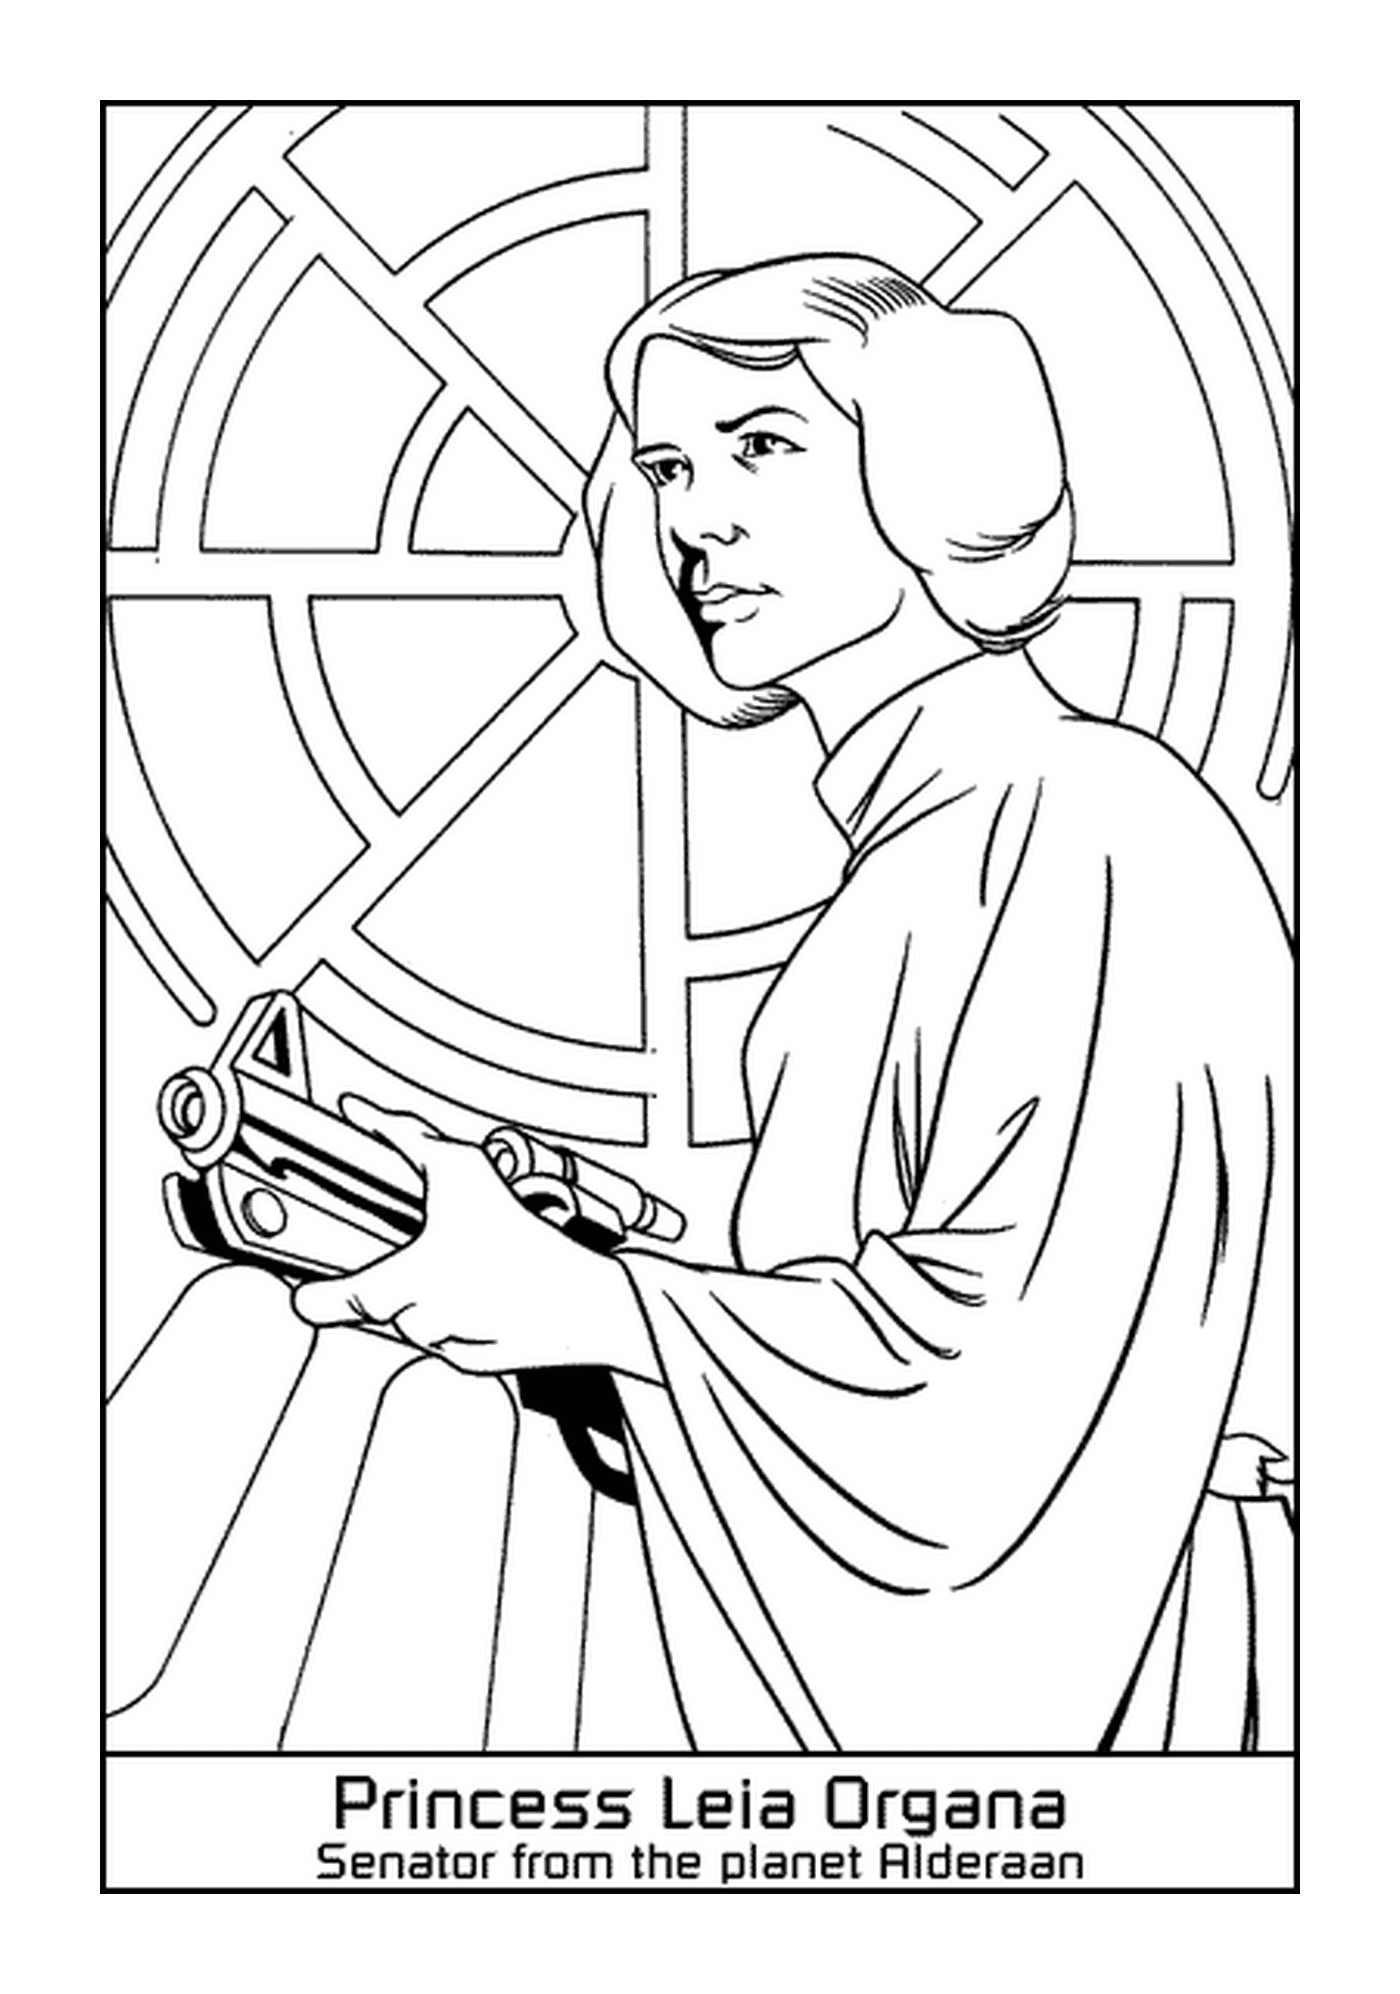  Prinzessin Leia Organa, tapfer 